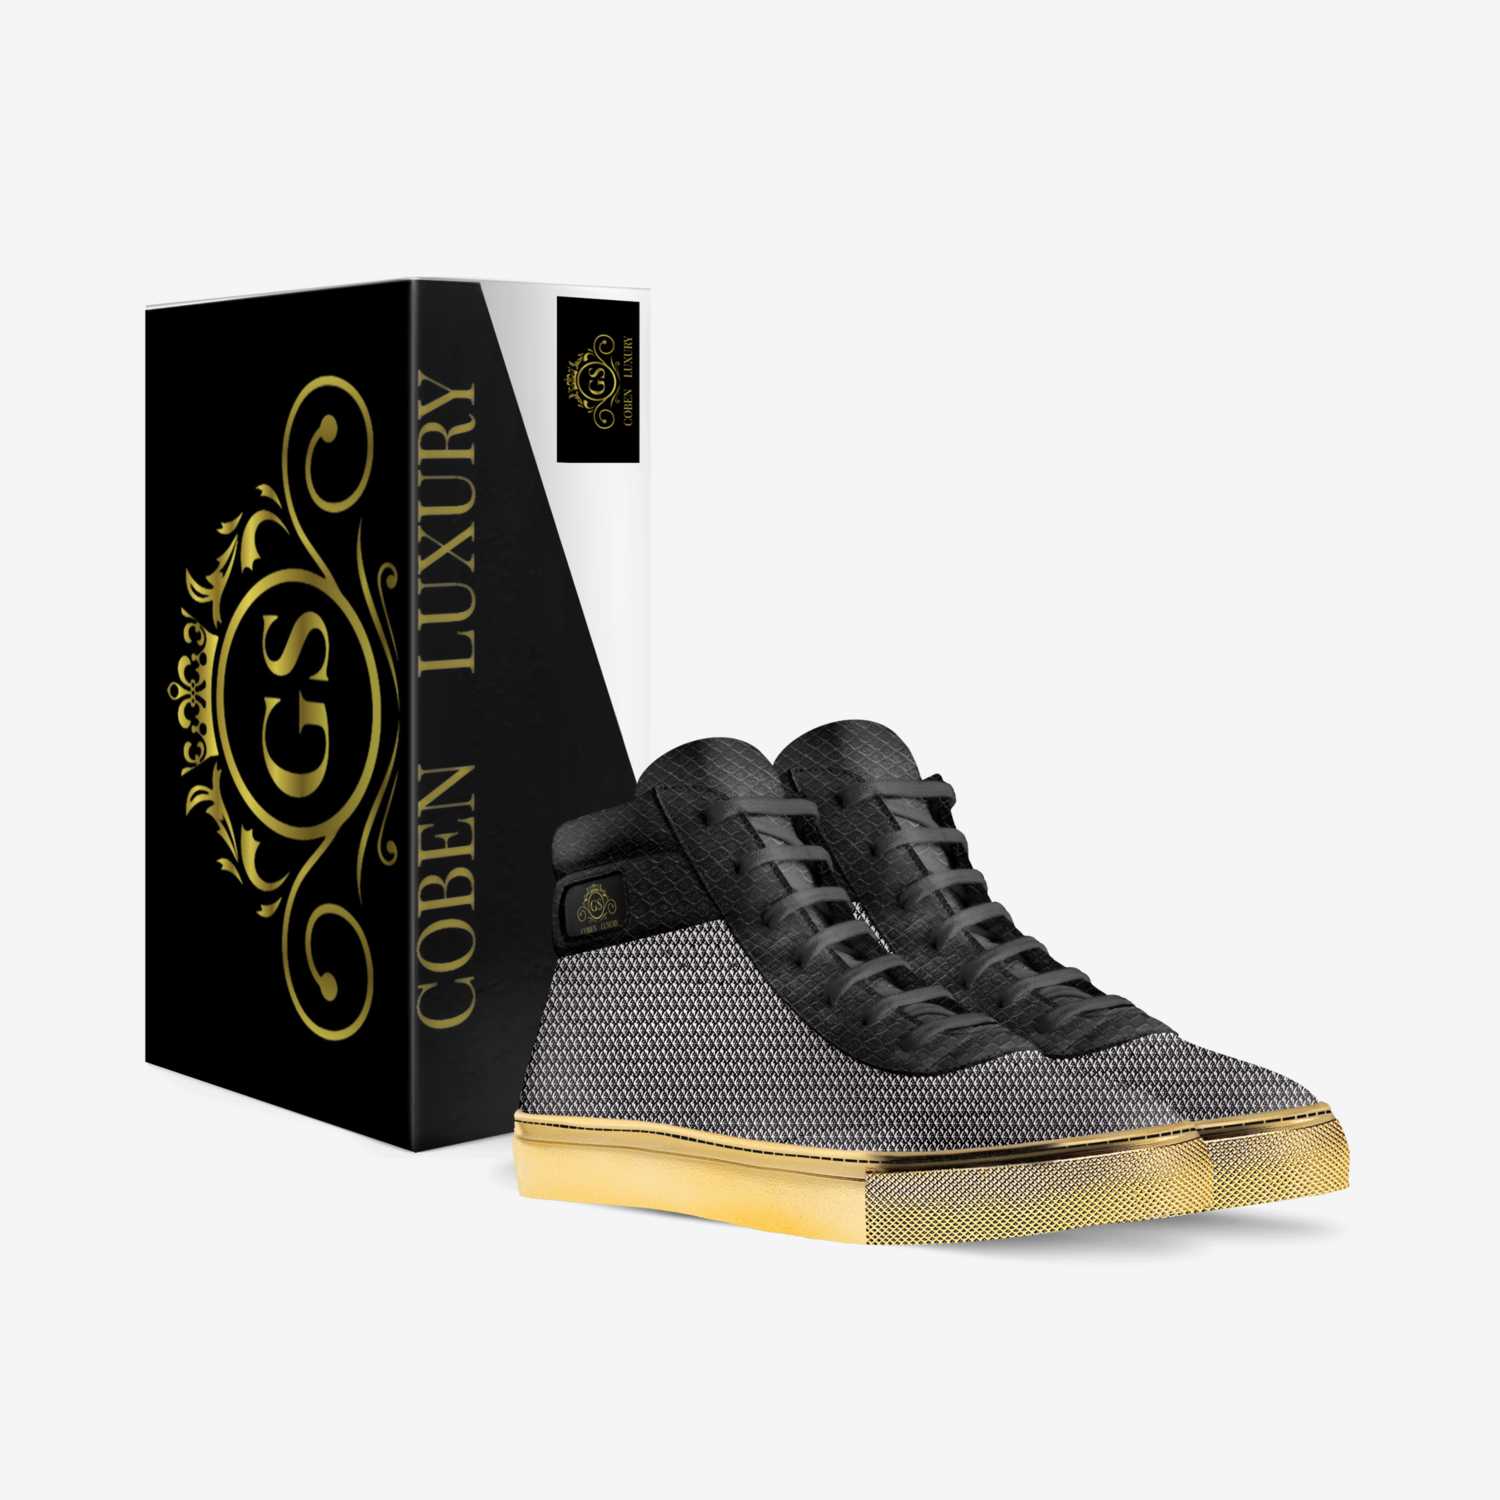 GIO SERRATORE LUX custom made in Italy shoes by Coben&gio Cobenpolo | Box view